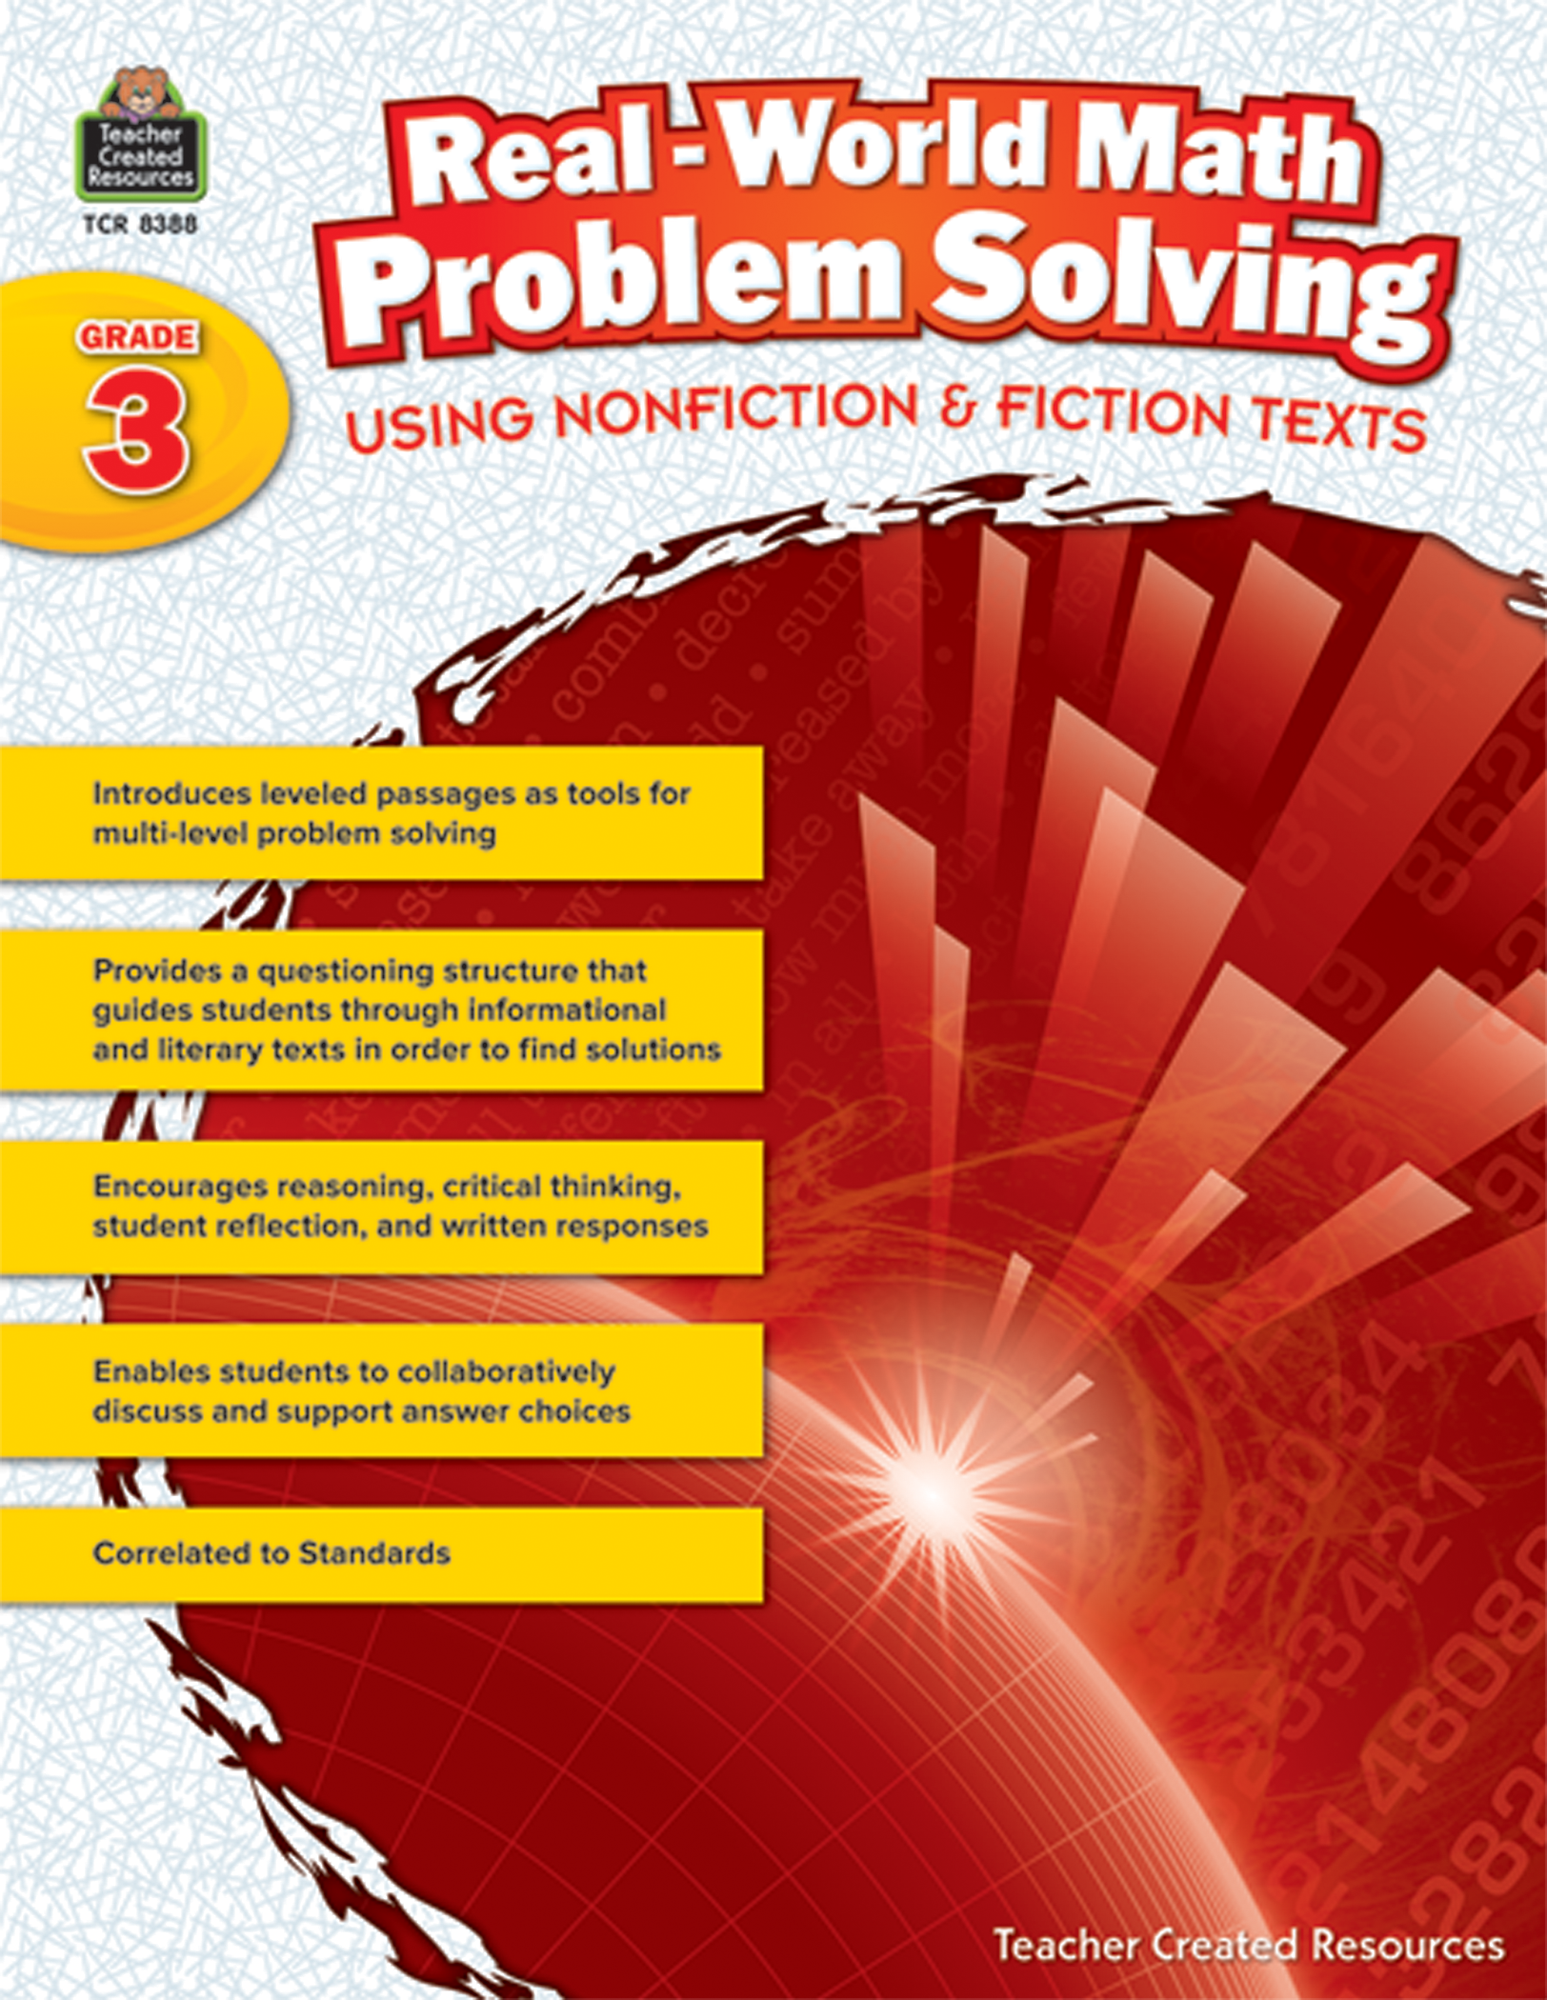 Real-World Math Problem Solving Grade 3 - TCR8388 | Teacher Created